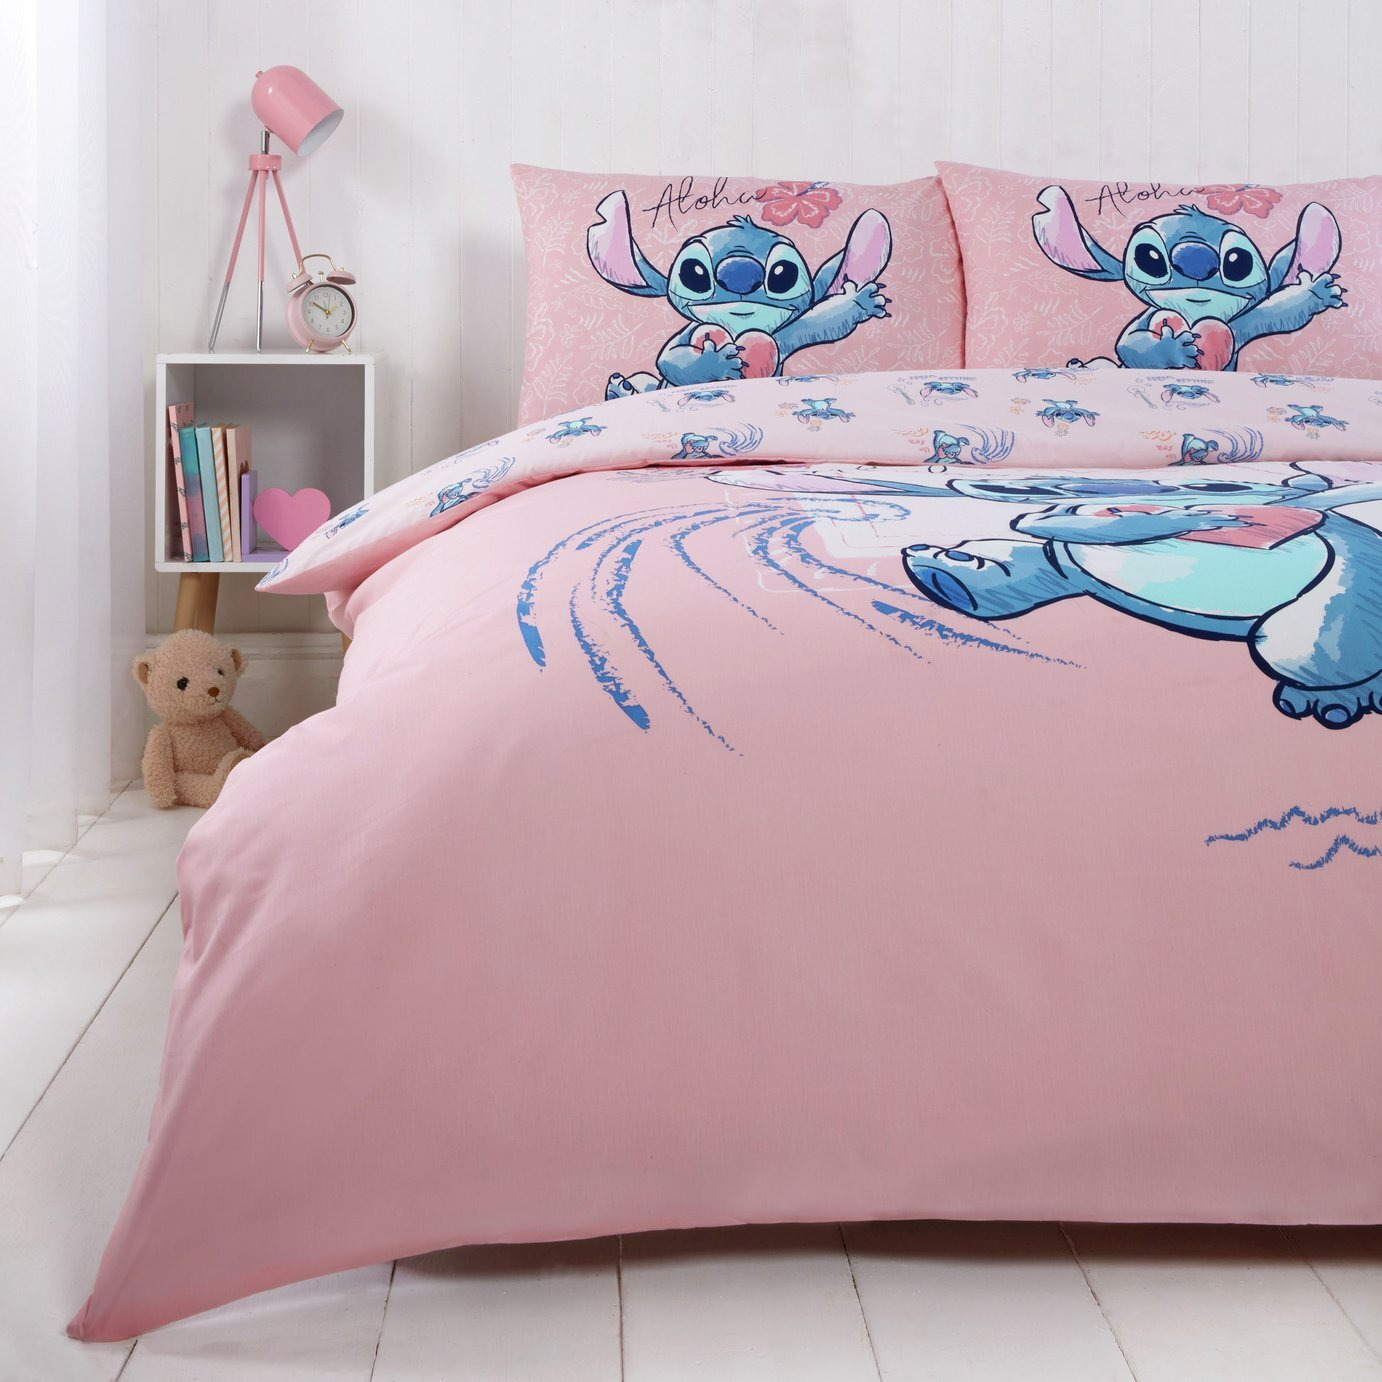 Disney Stitch Pink Kids Bedding Set - Double - image 1